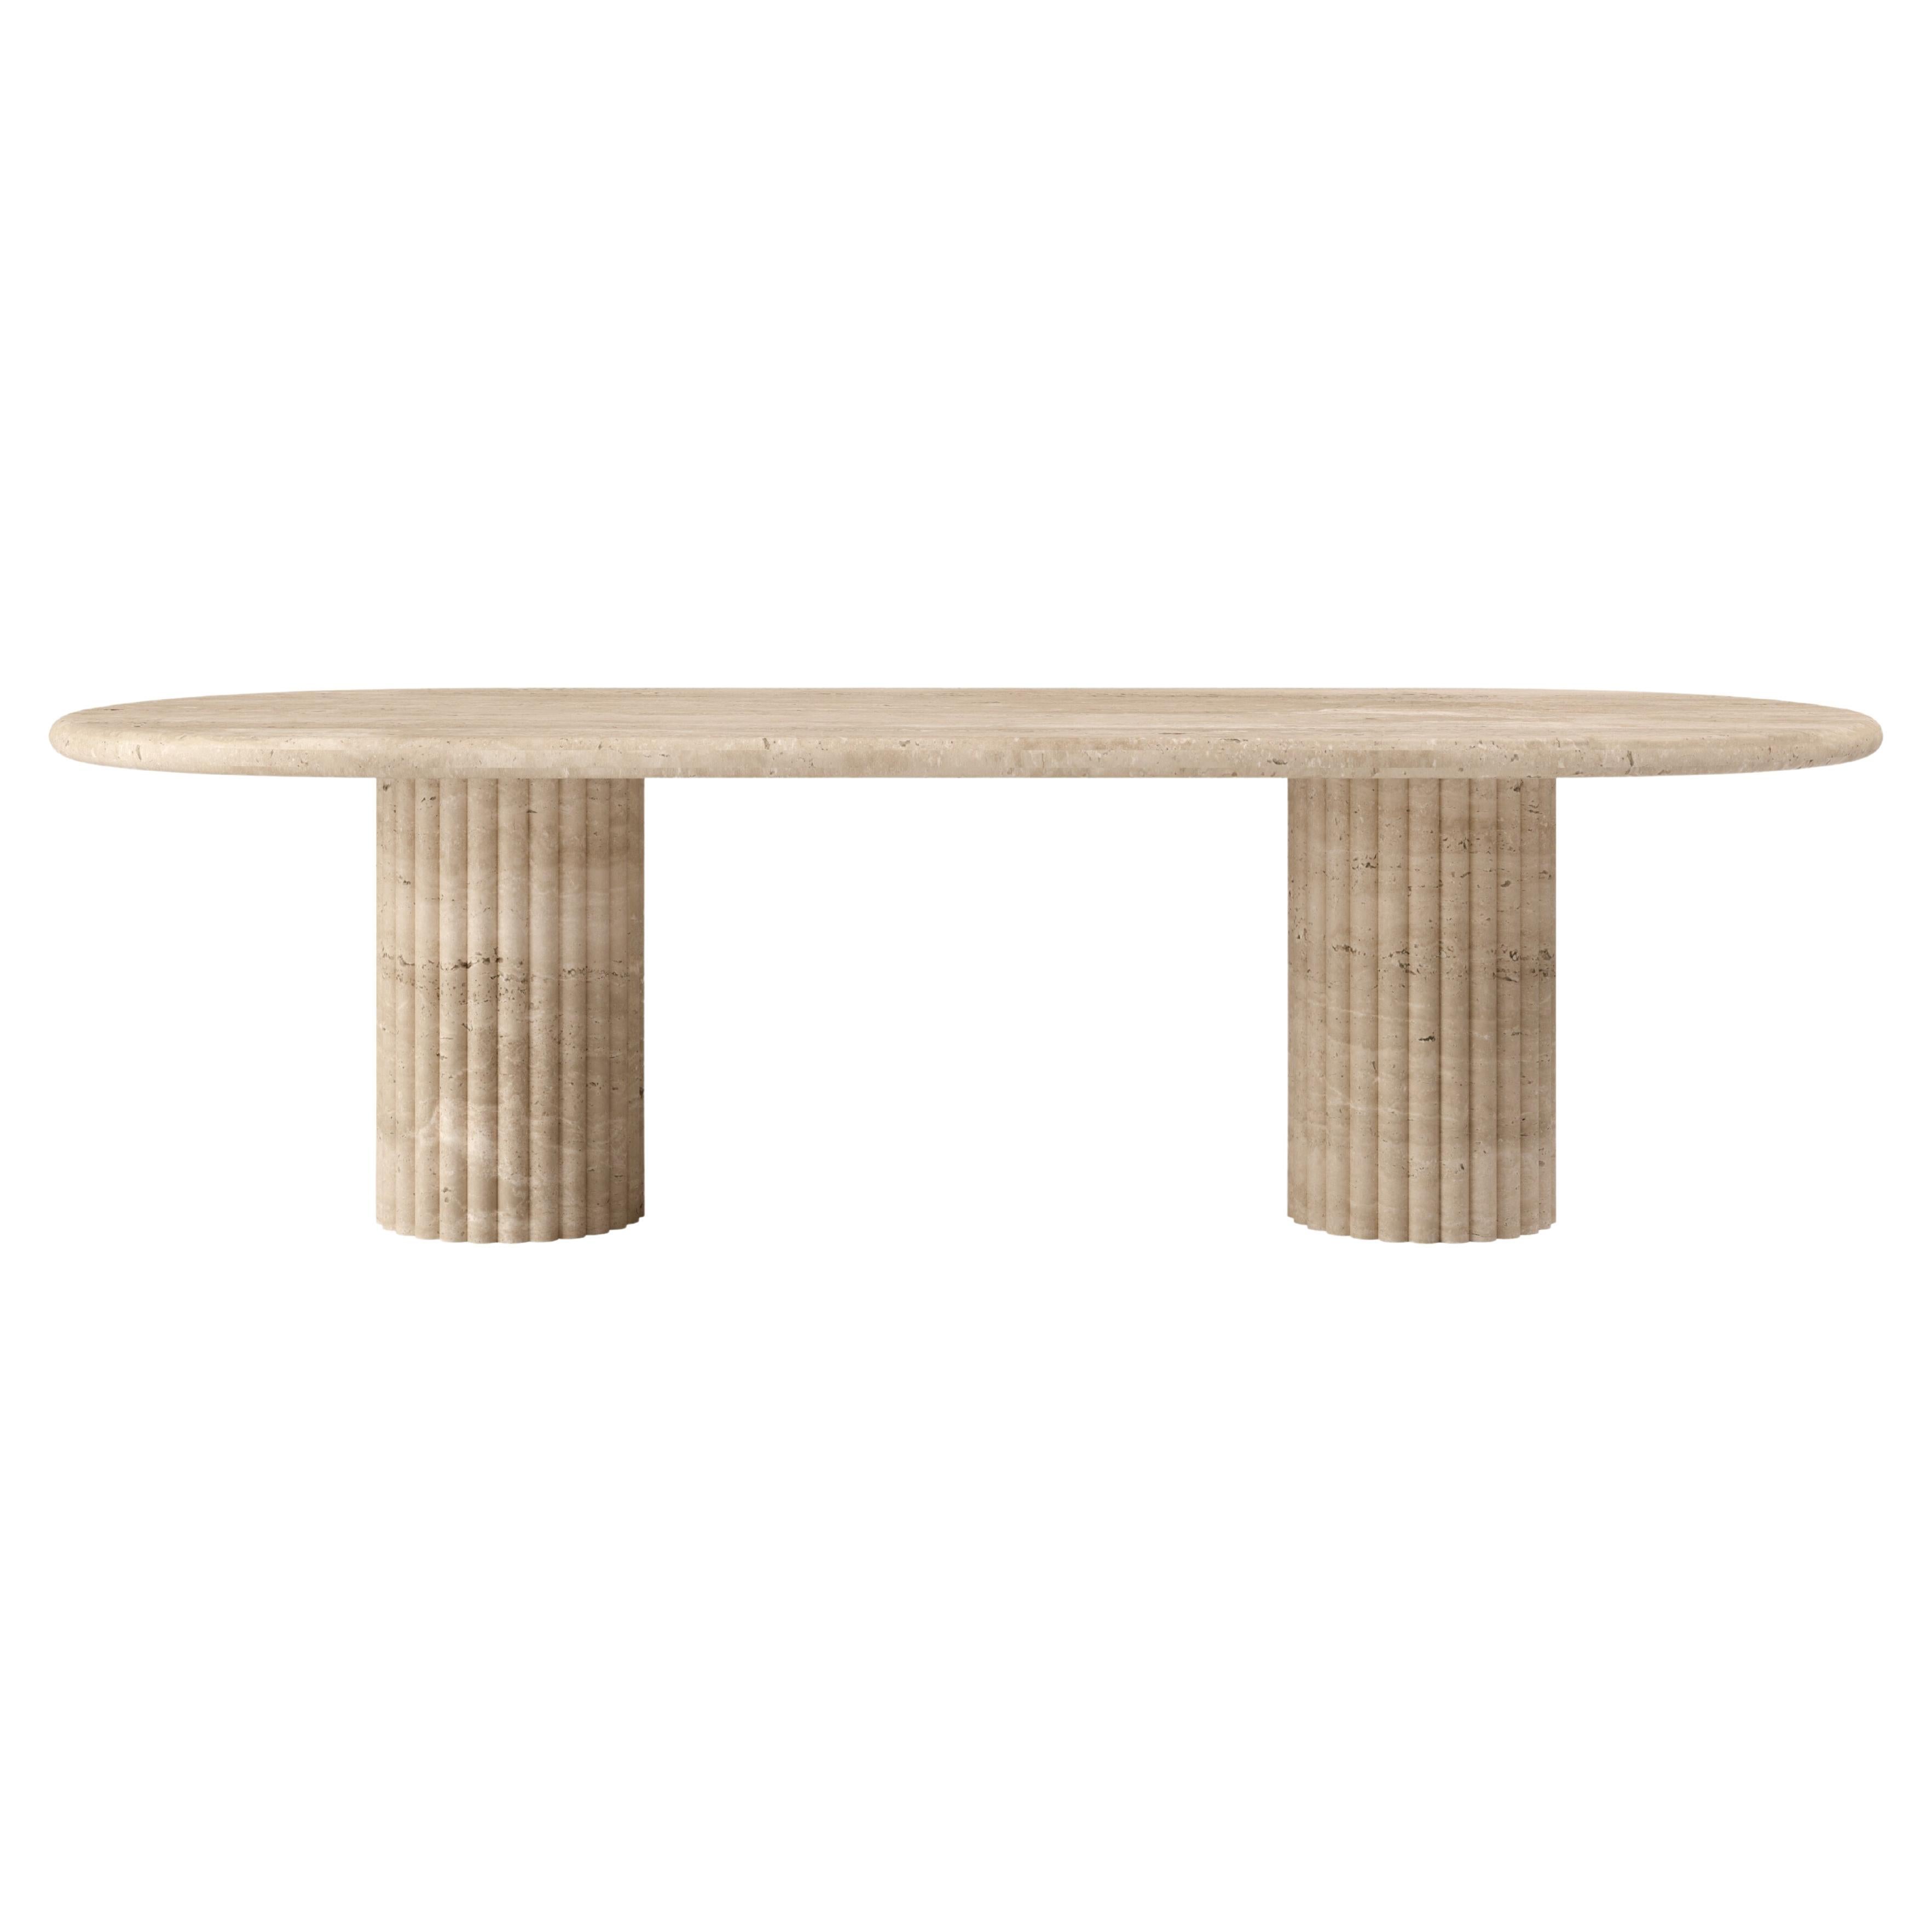 FORM(LA) Fluta Oval Dining Table 118”L x 48”W x 30”H Travertino Crema VC